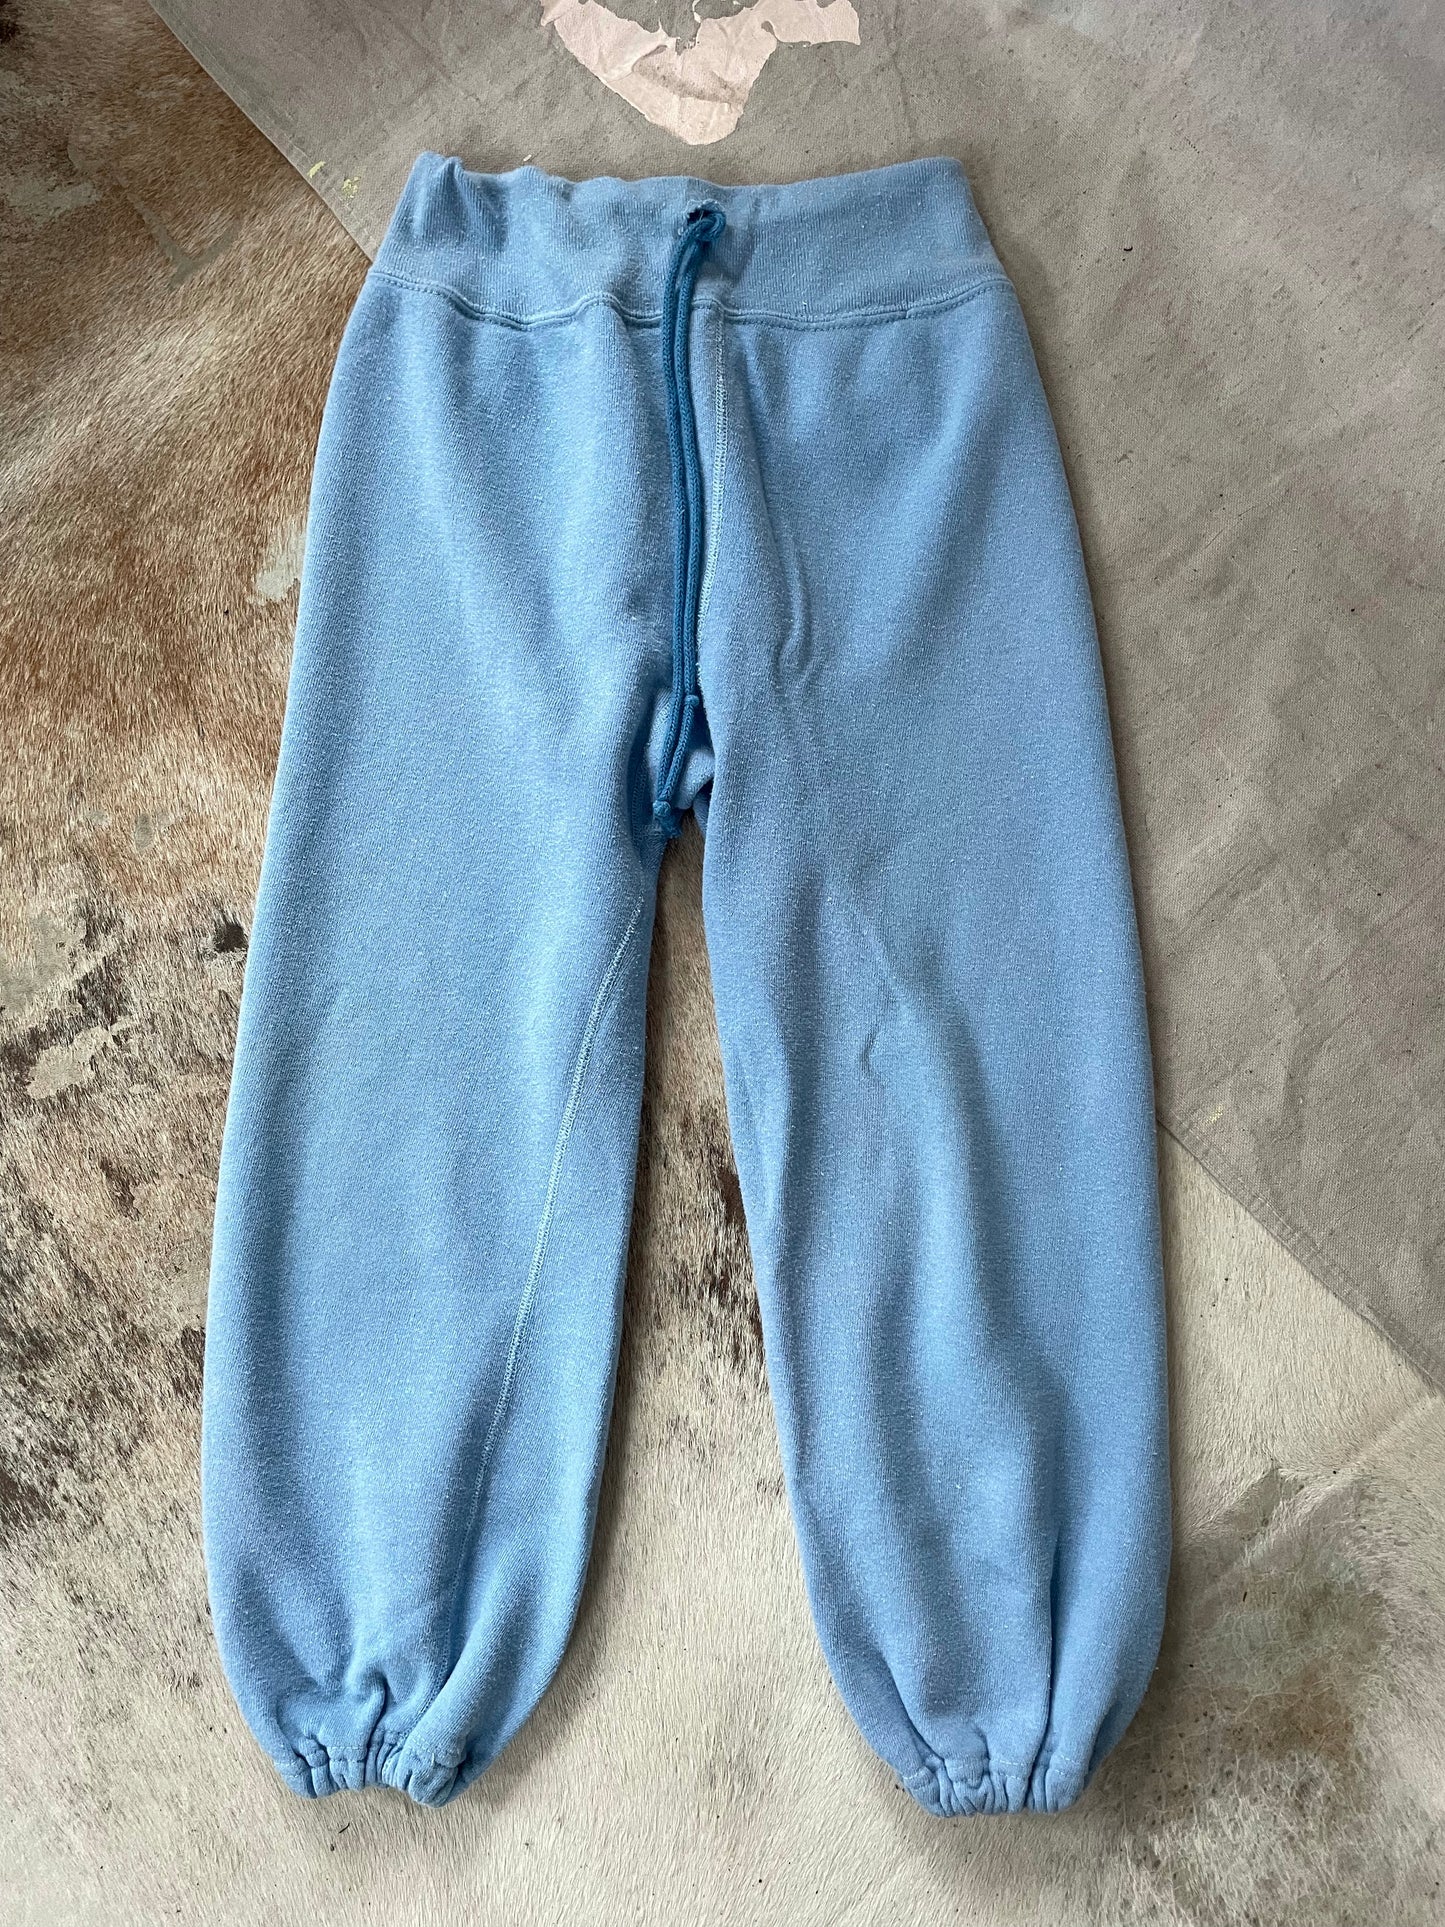 Baby Blue Sweatpants